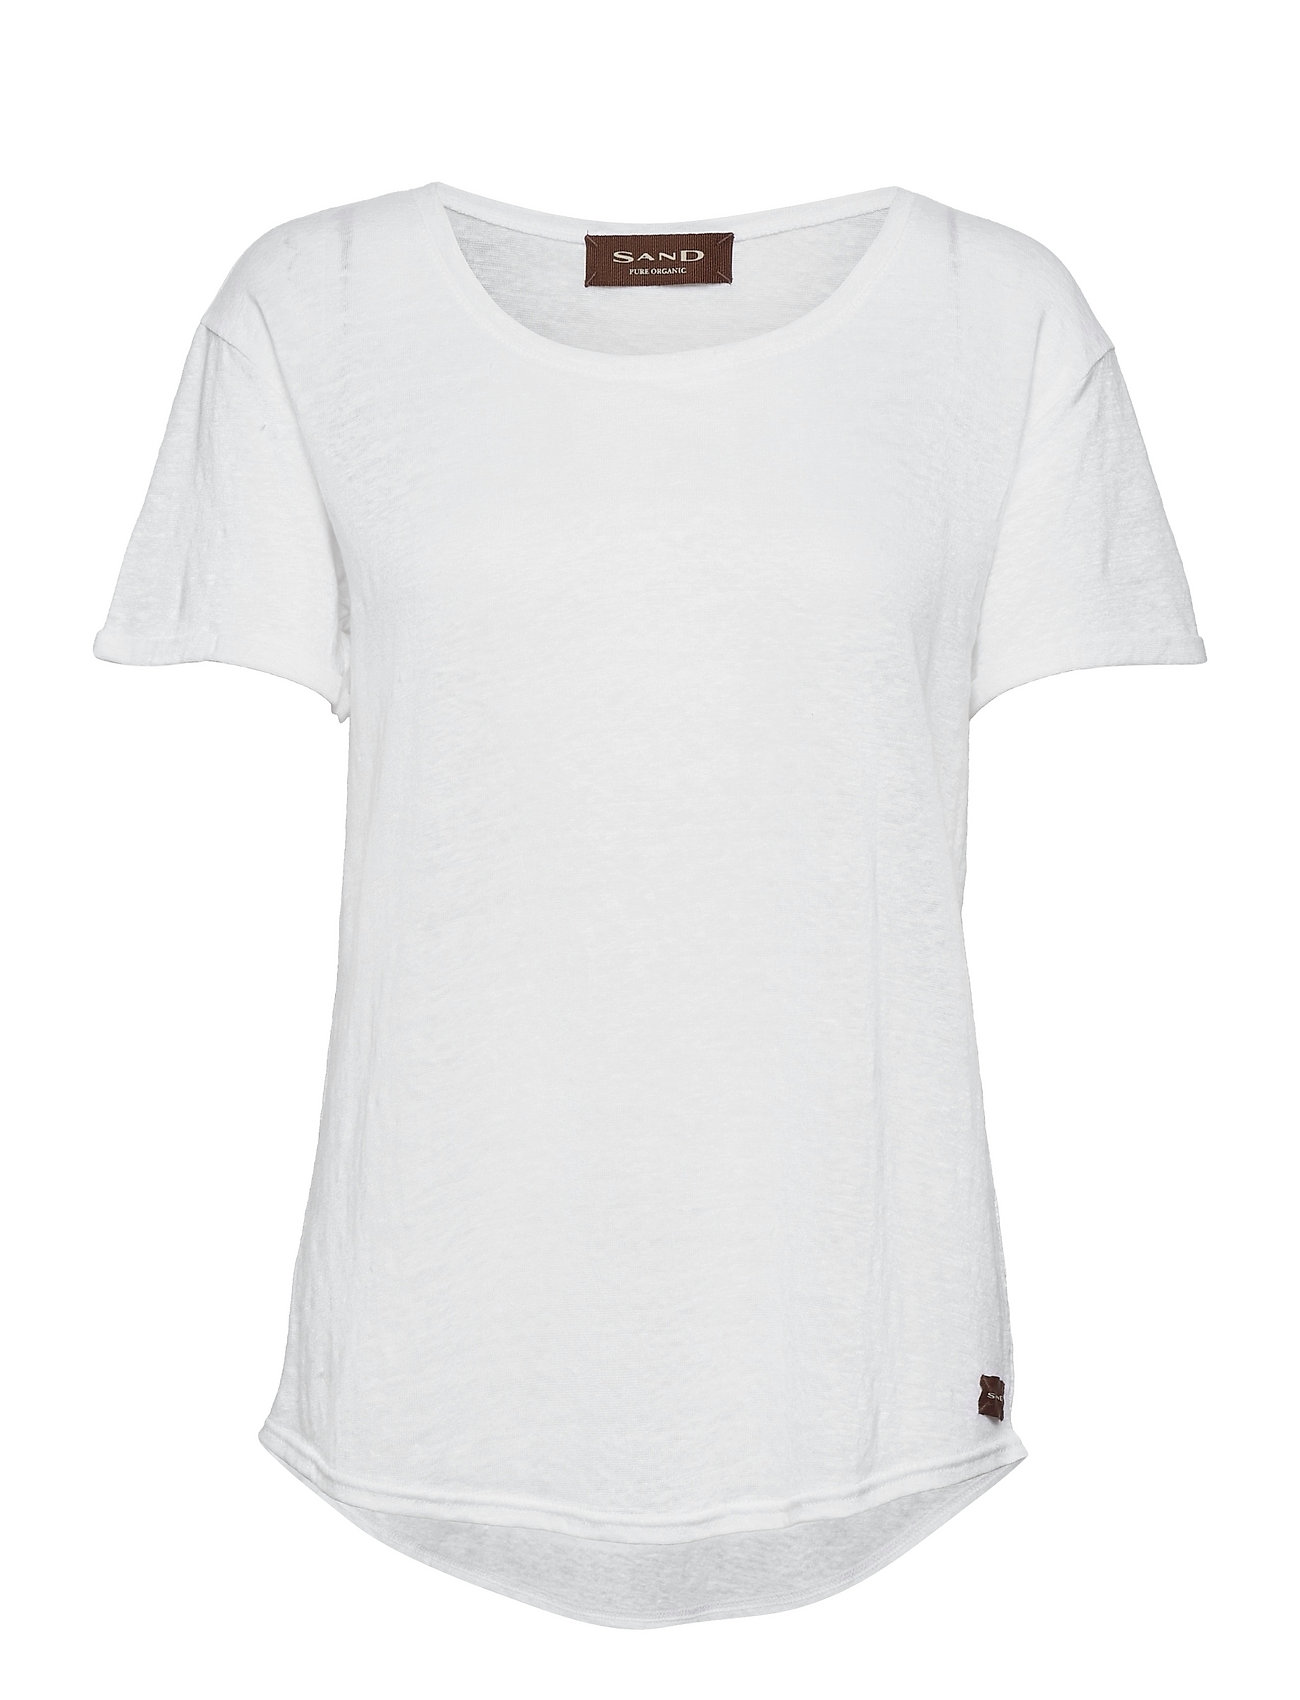 4906 - Tami T-shirts & Tops Short-sleeved Valkoinen SAND